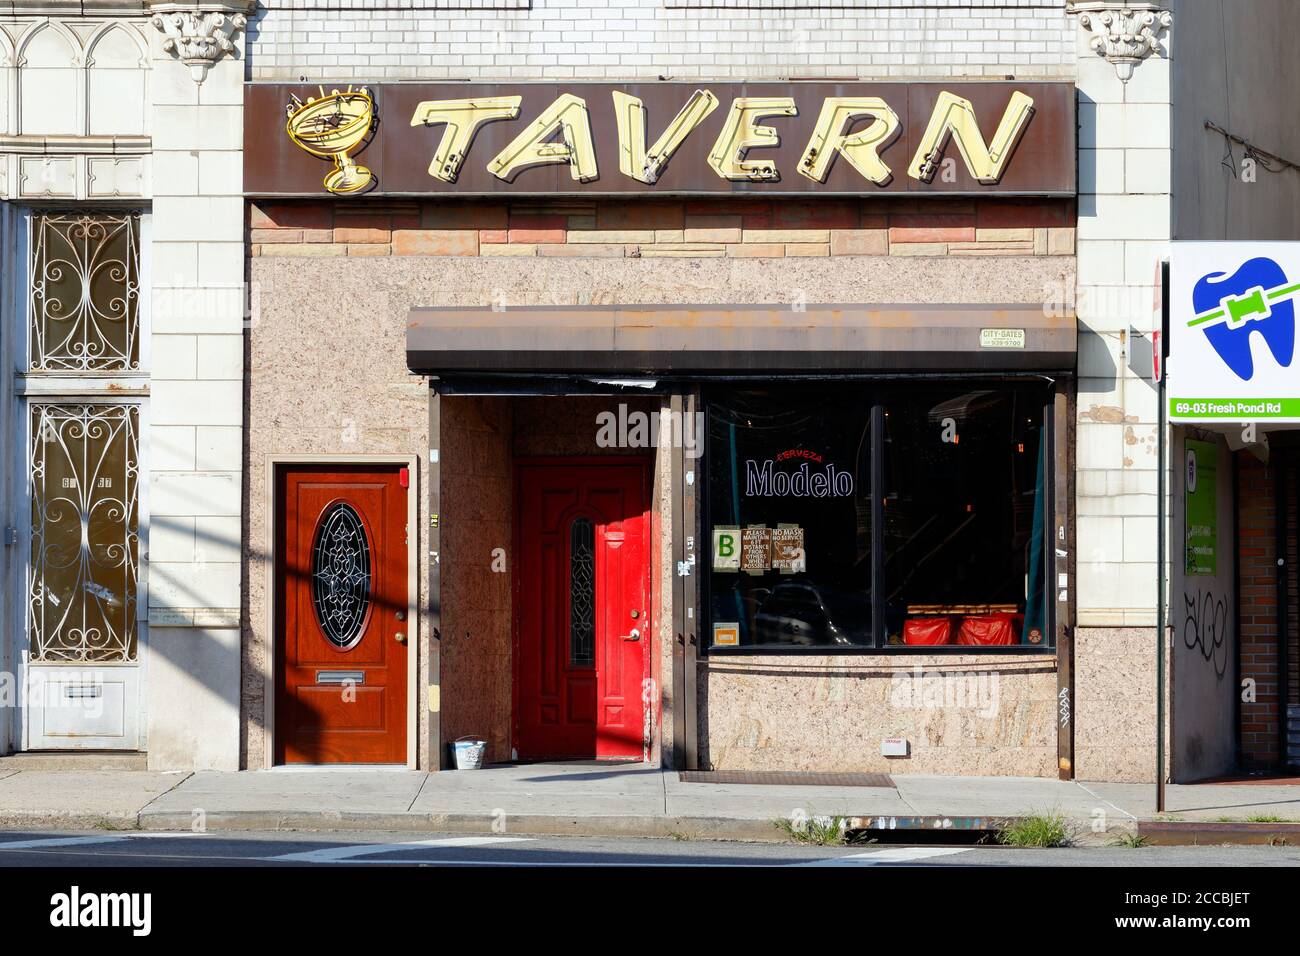 Queens Tavern, 68-69 Fresh Pond Rd, Queens, New York. New York photo d'un bar de quartier dans le quartier de Ridgewood. Banque D'Images